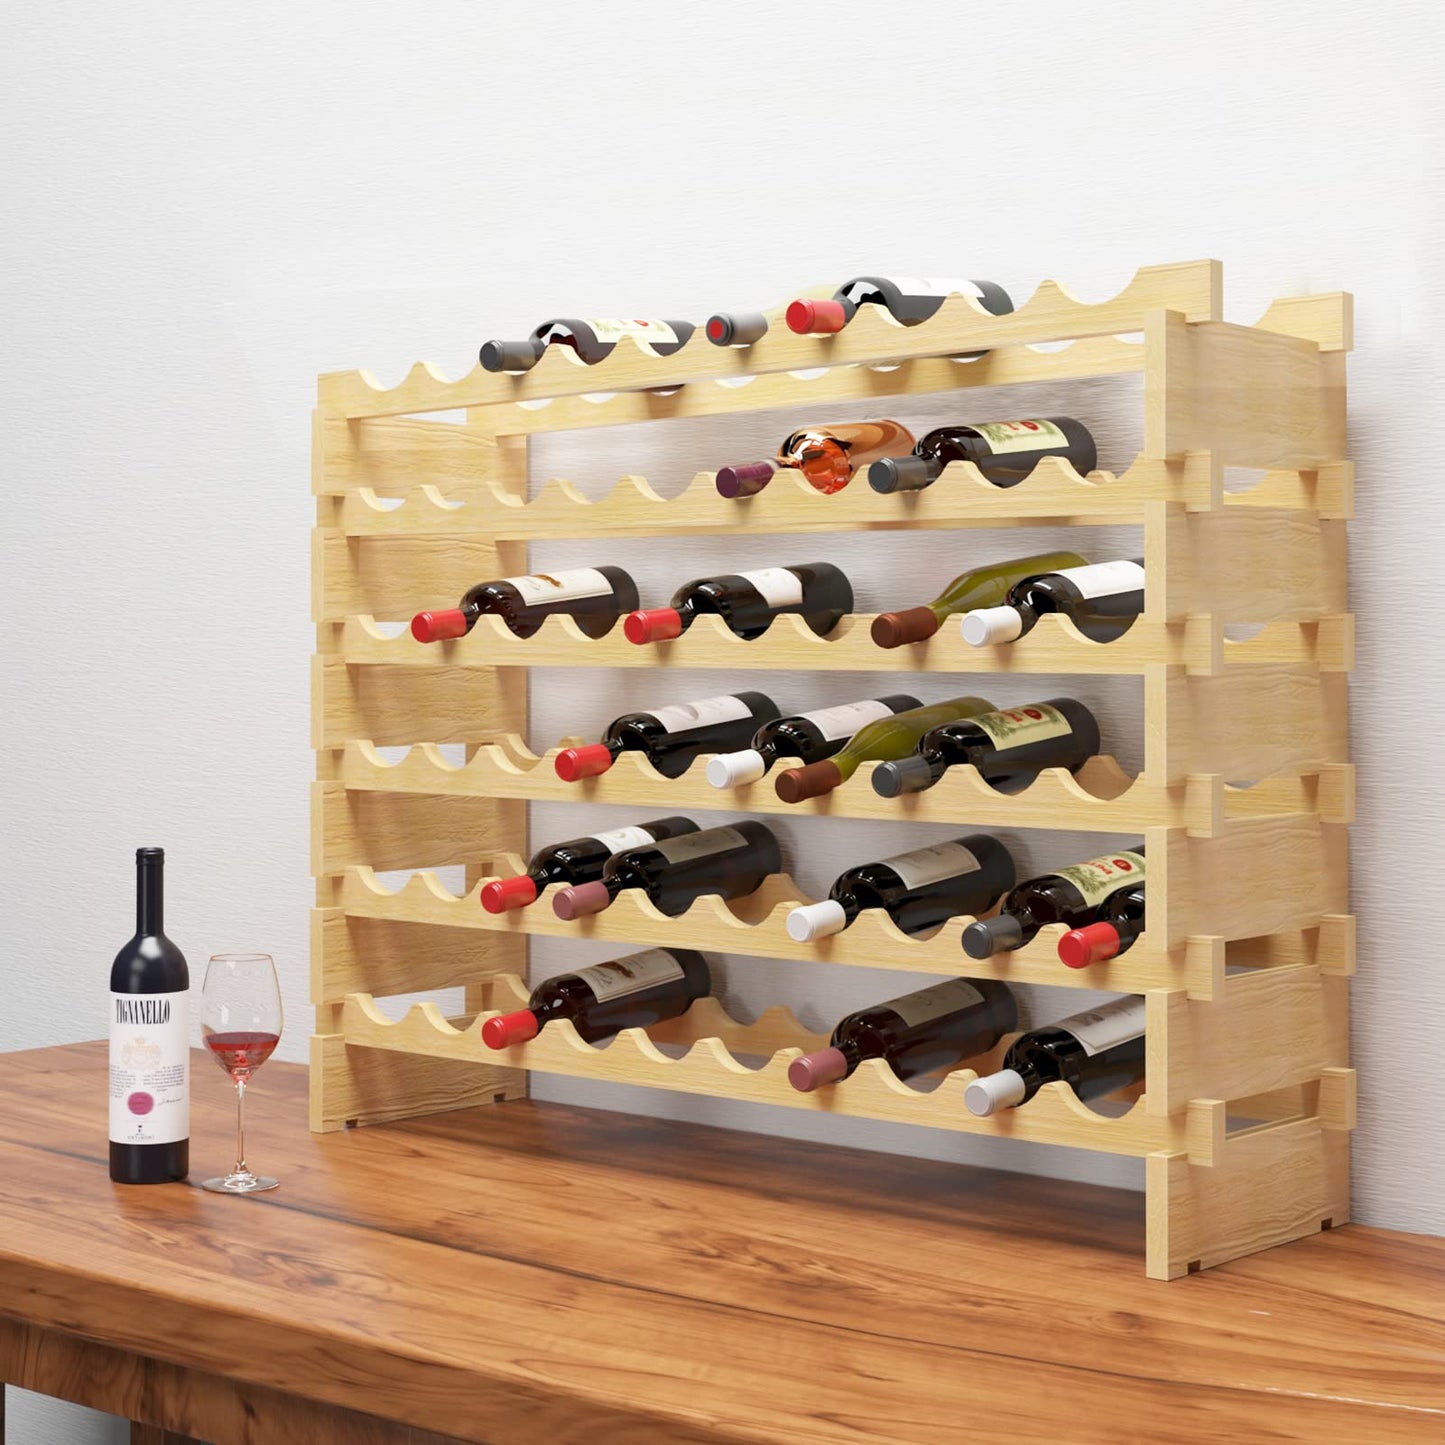 SogesHome Wine Rack Wood Storage Rack Stand, 60 Bottles Holder, 6 Tier Stack-able Wine Storage Organizer Free Standing